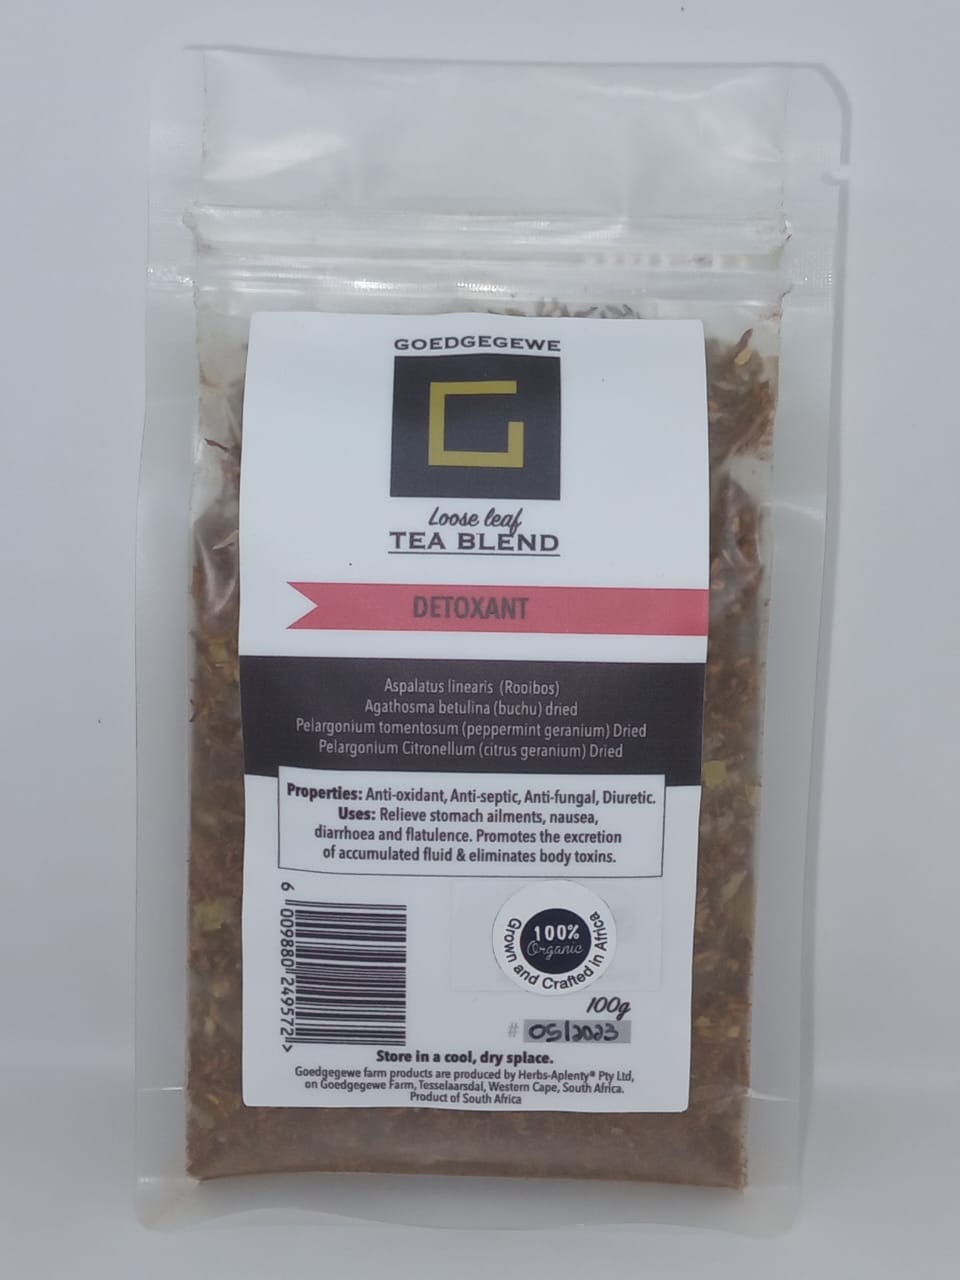 Goedgegewe Organic Loose Leaf Detoxant Tea 100g